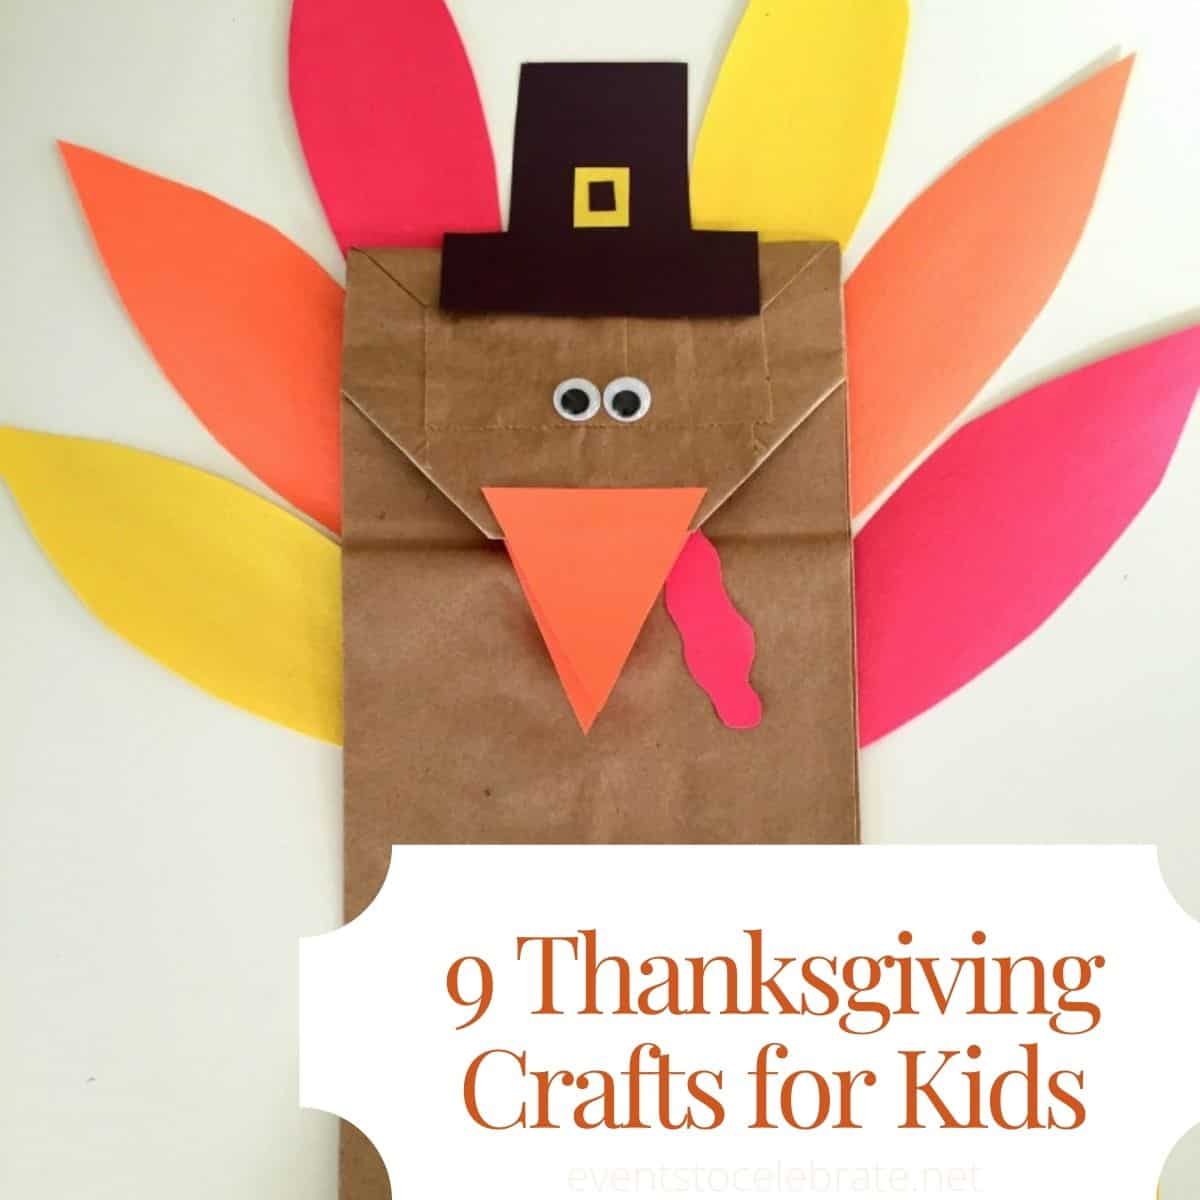 9 Thanksgiving crafts for kids thumbnail